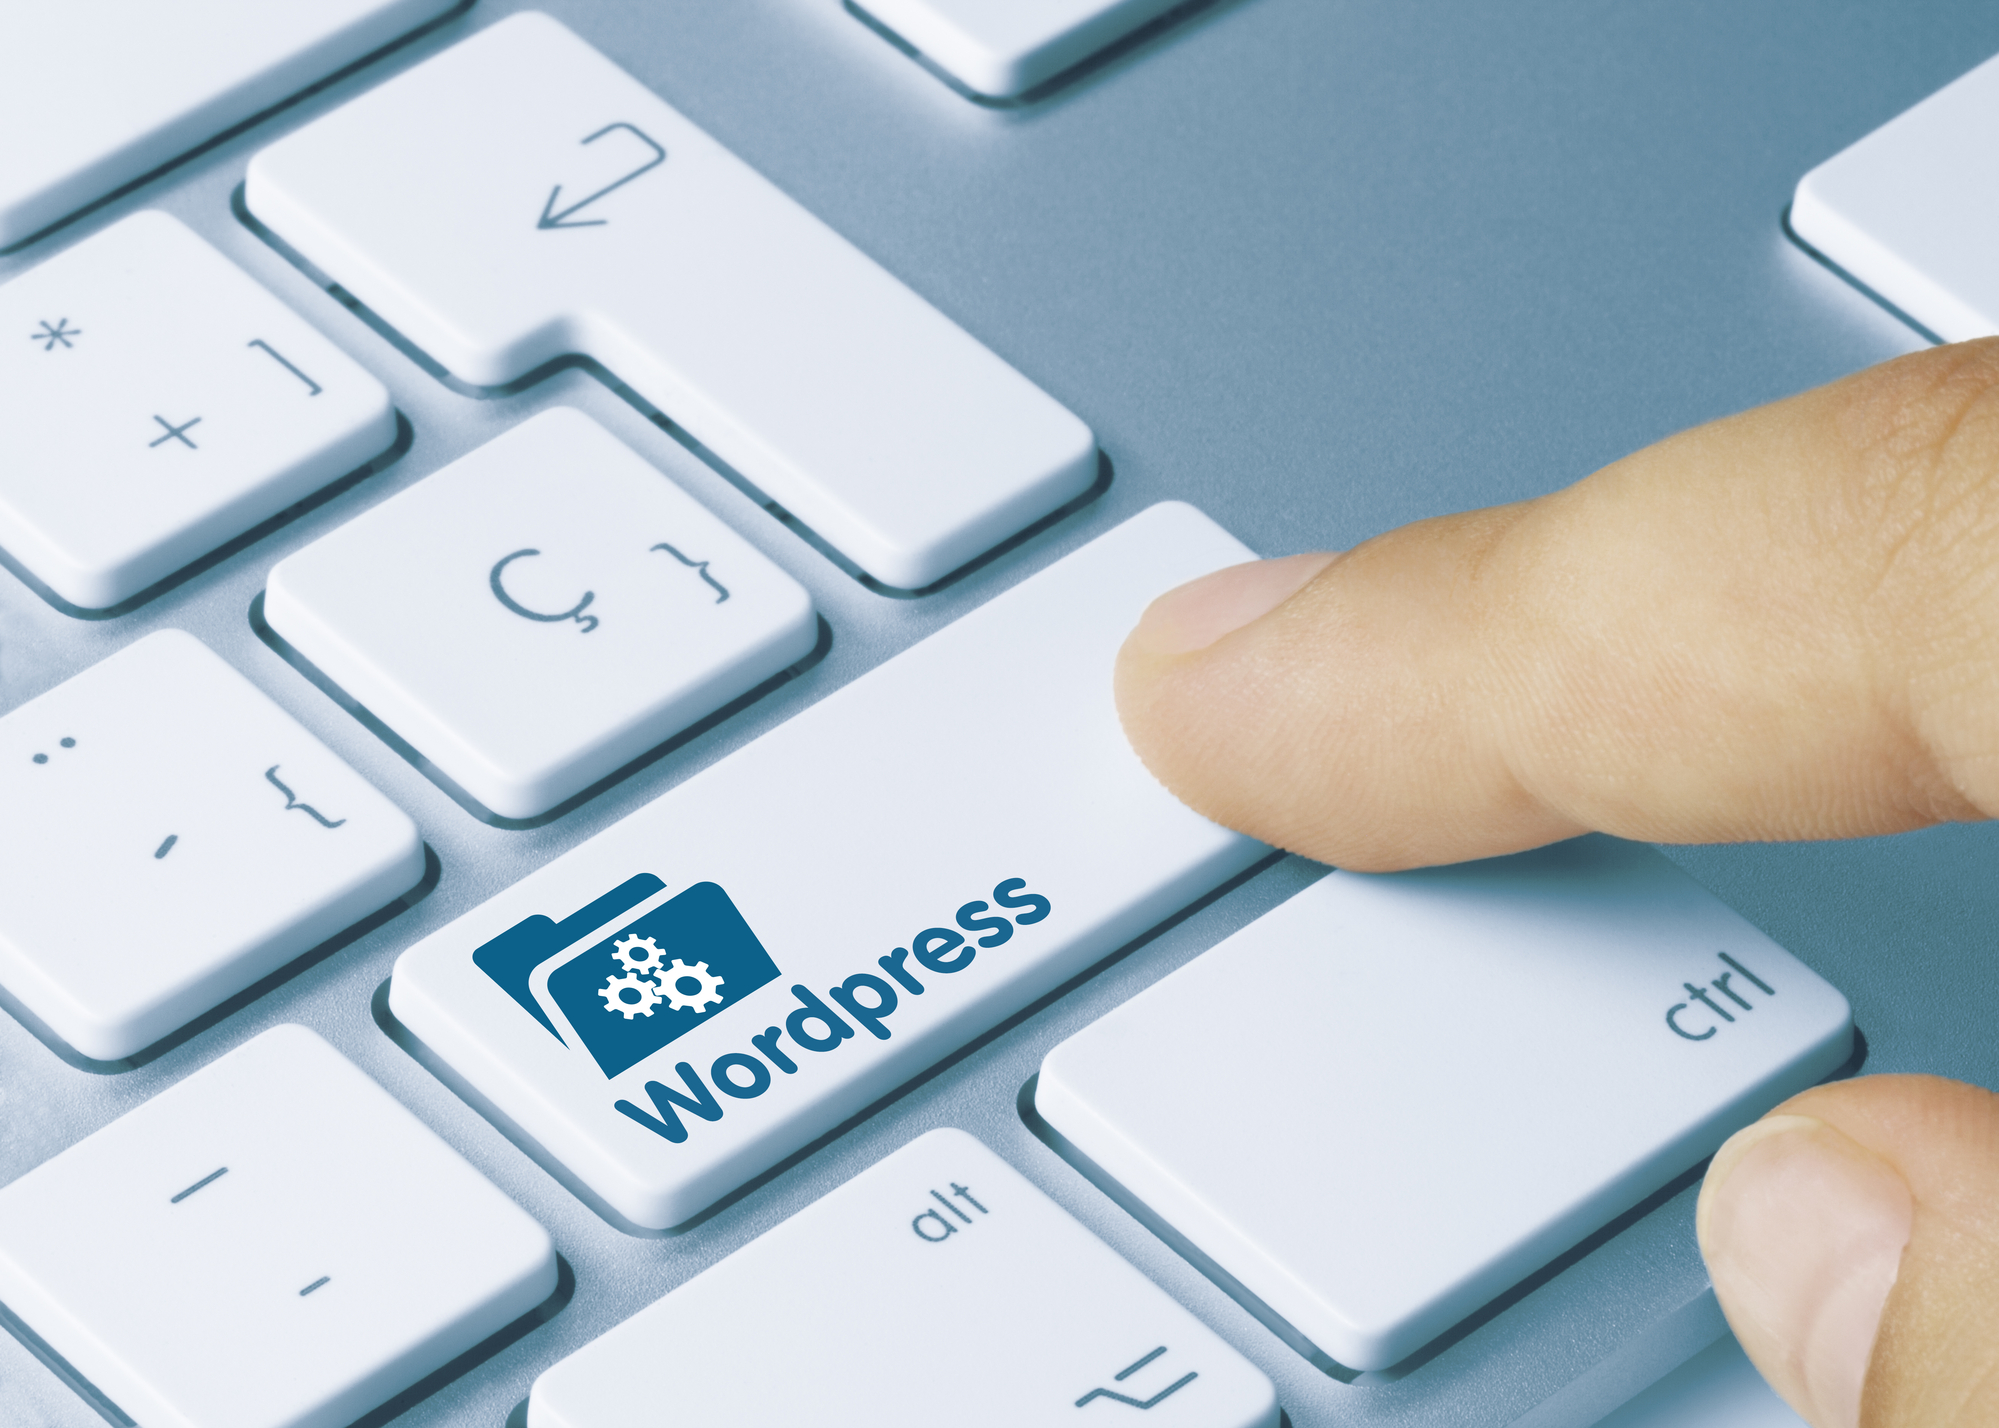 keyboard button with WordPress logo